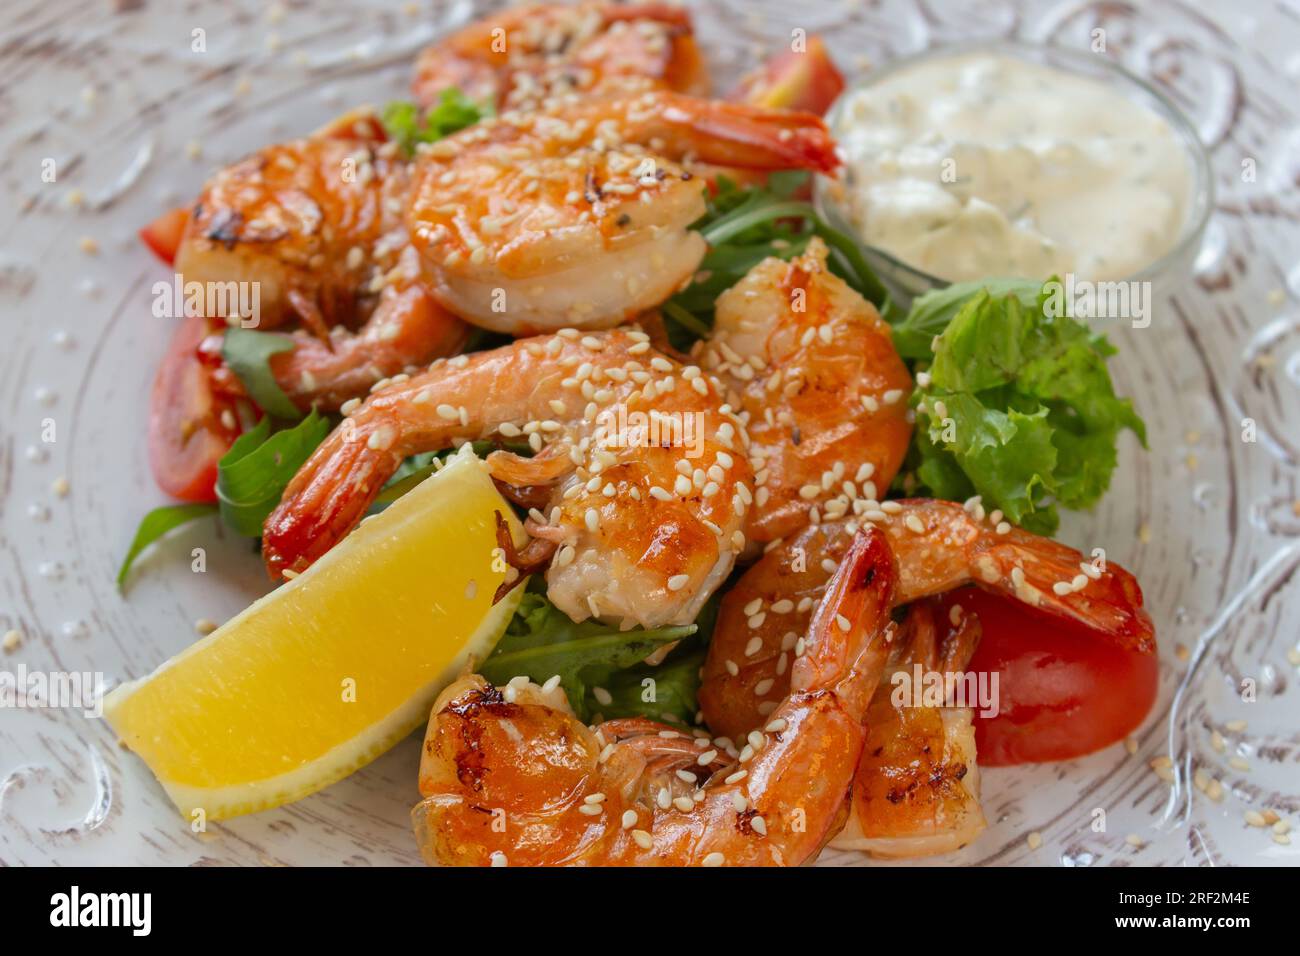 Shrimps with lemon and salad. Seafood close up. Served fish dish. Fish restaurant menu. Fried prawns with lemon. Mediterranean mollusk plate. Stock Photo